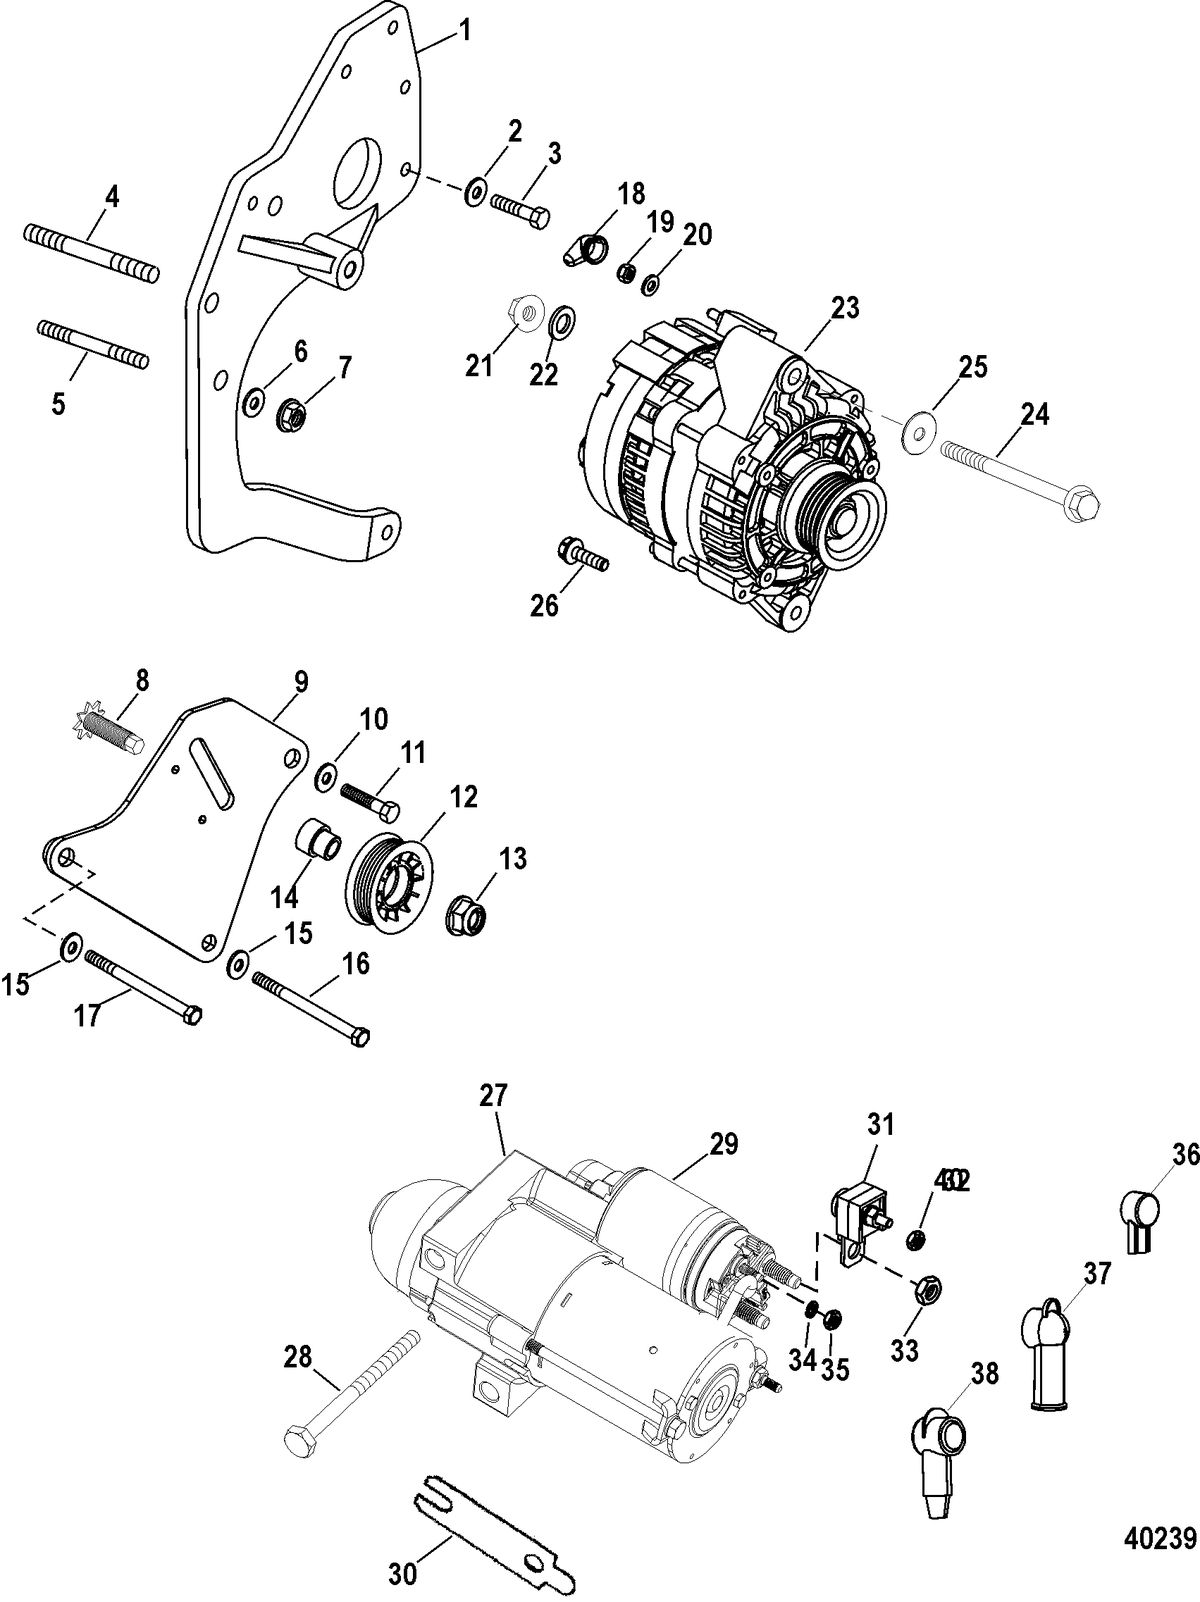 RACE STERNDRIVE 525 EFI Electrical Components(Starter And Alternator)